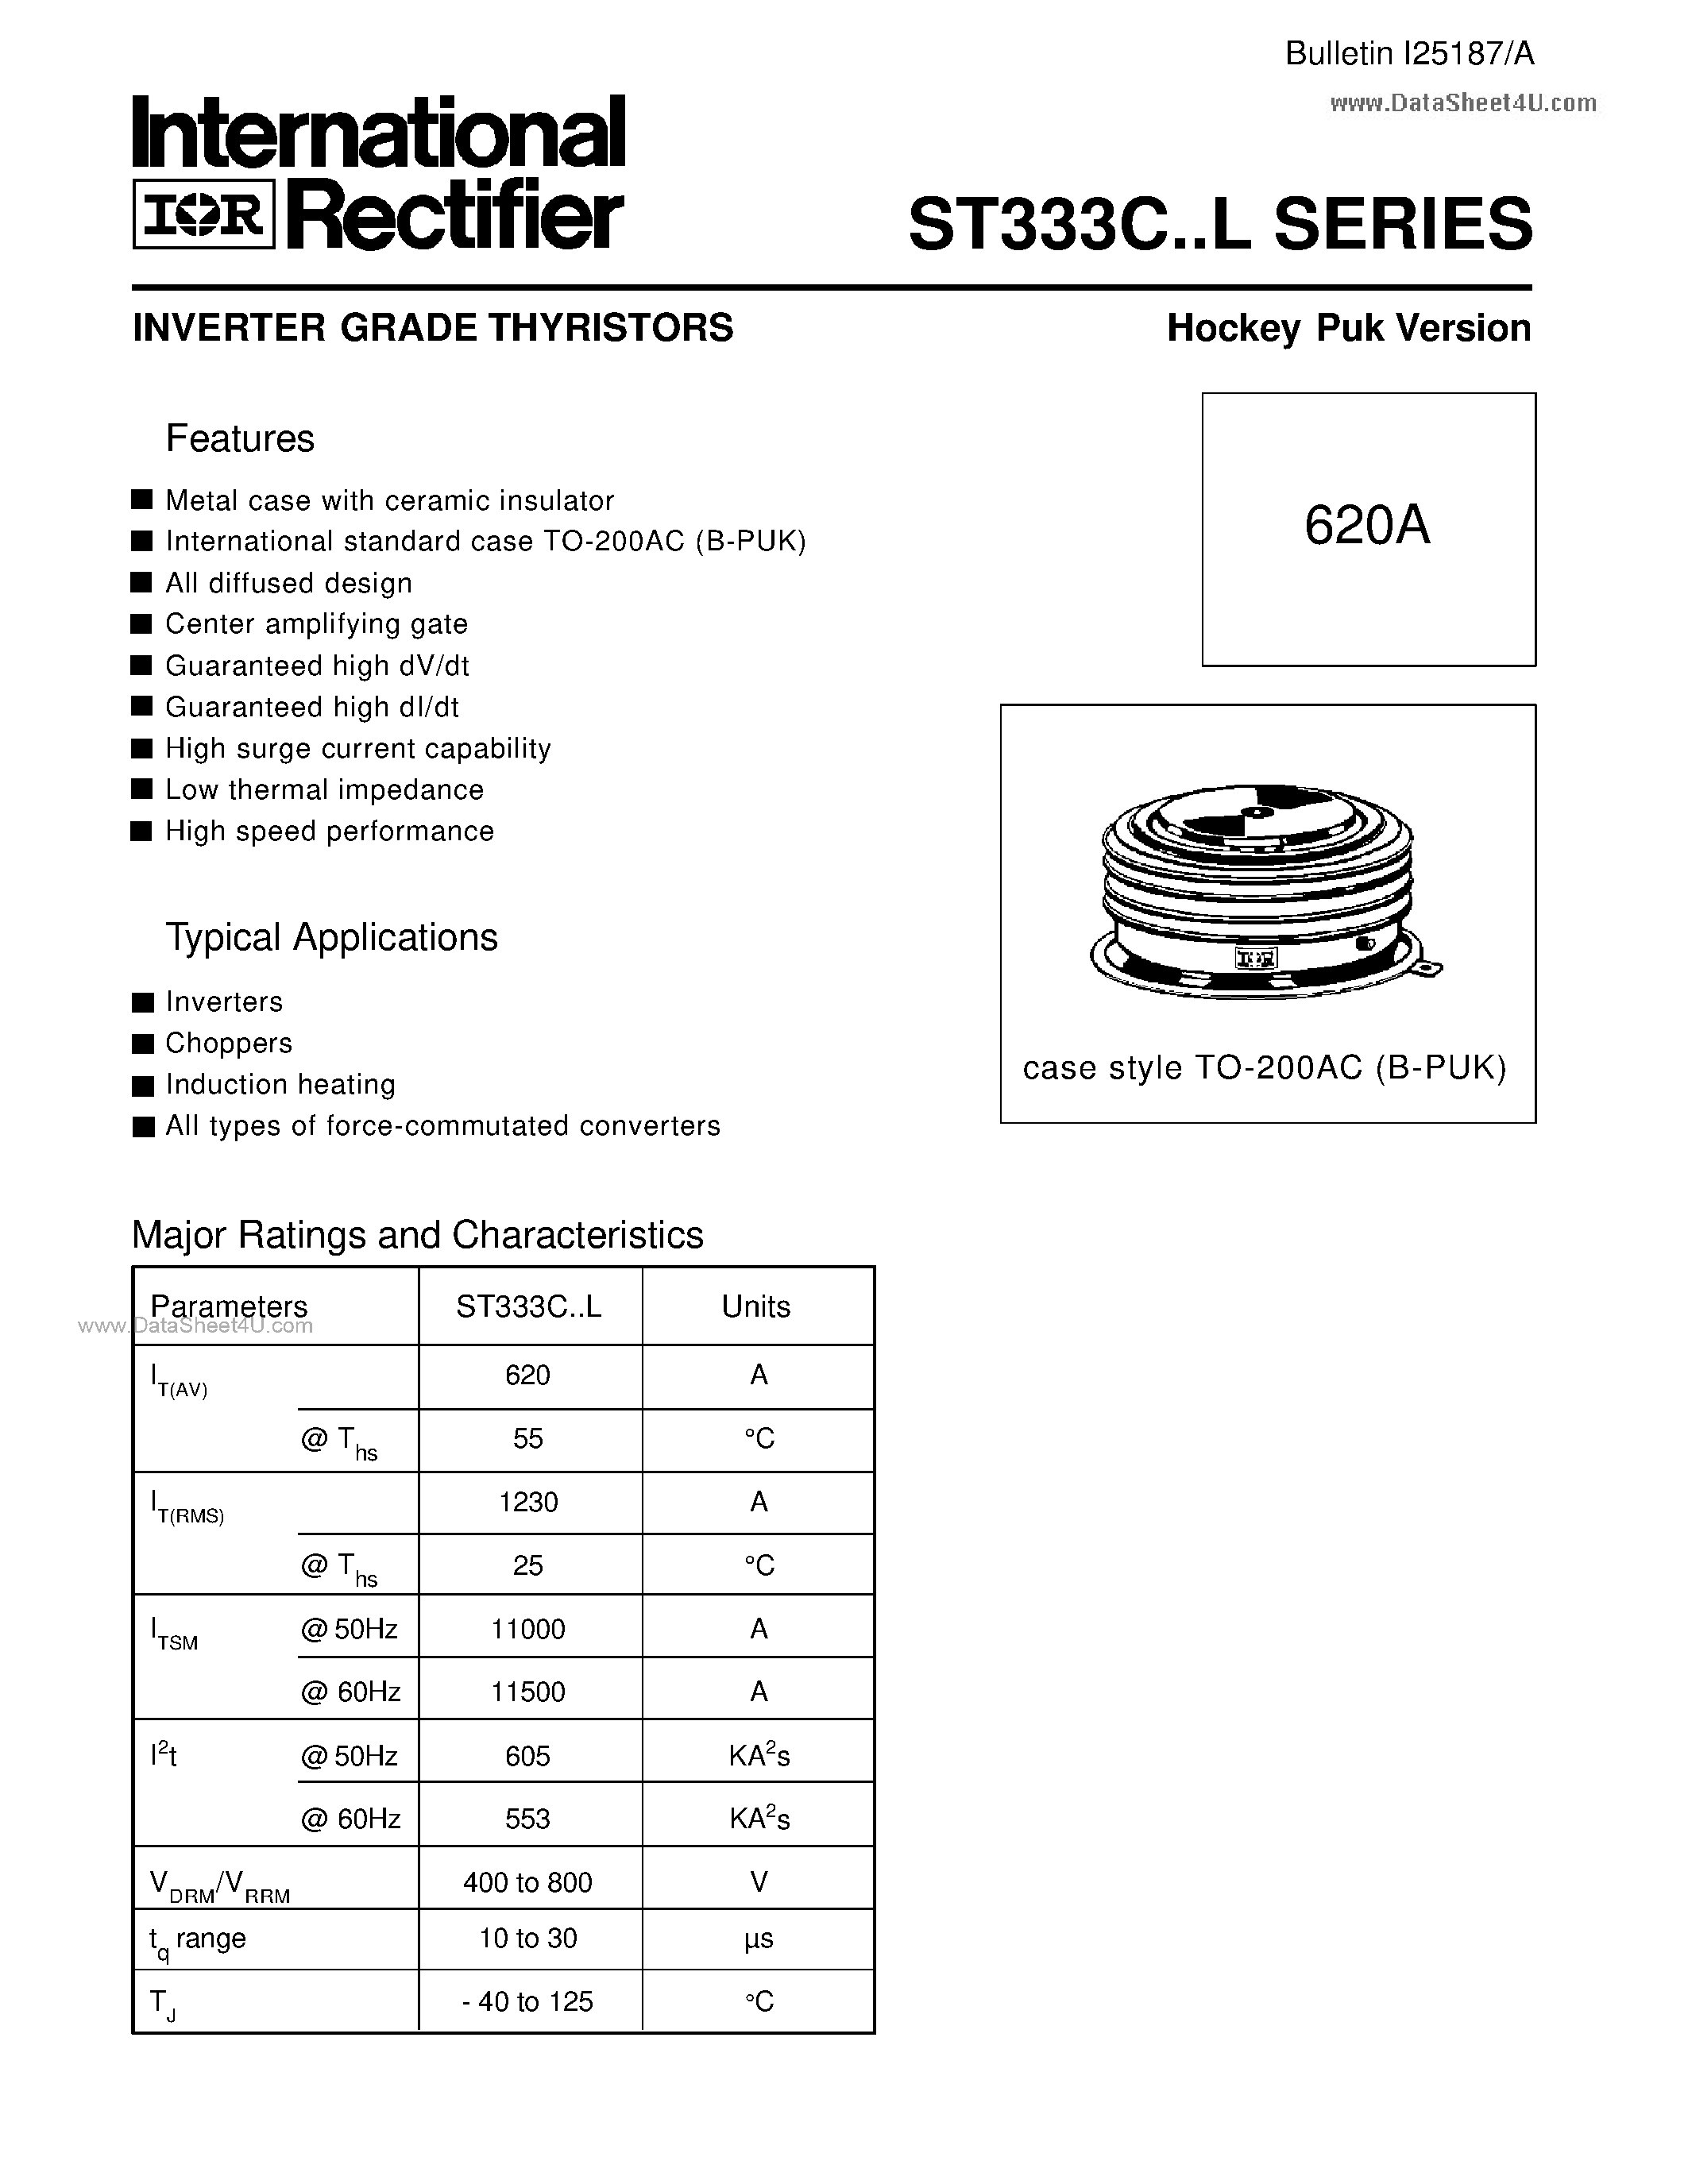 Даташит ST333C - INVERTER GRADE THYRISTORS Hockey Puk Version страница 2